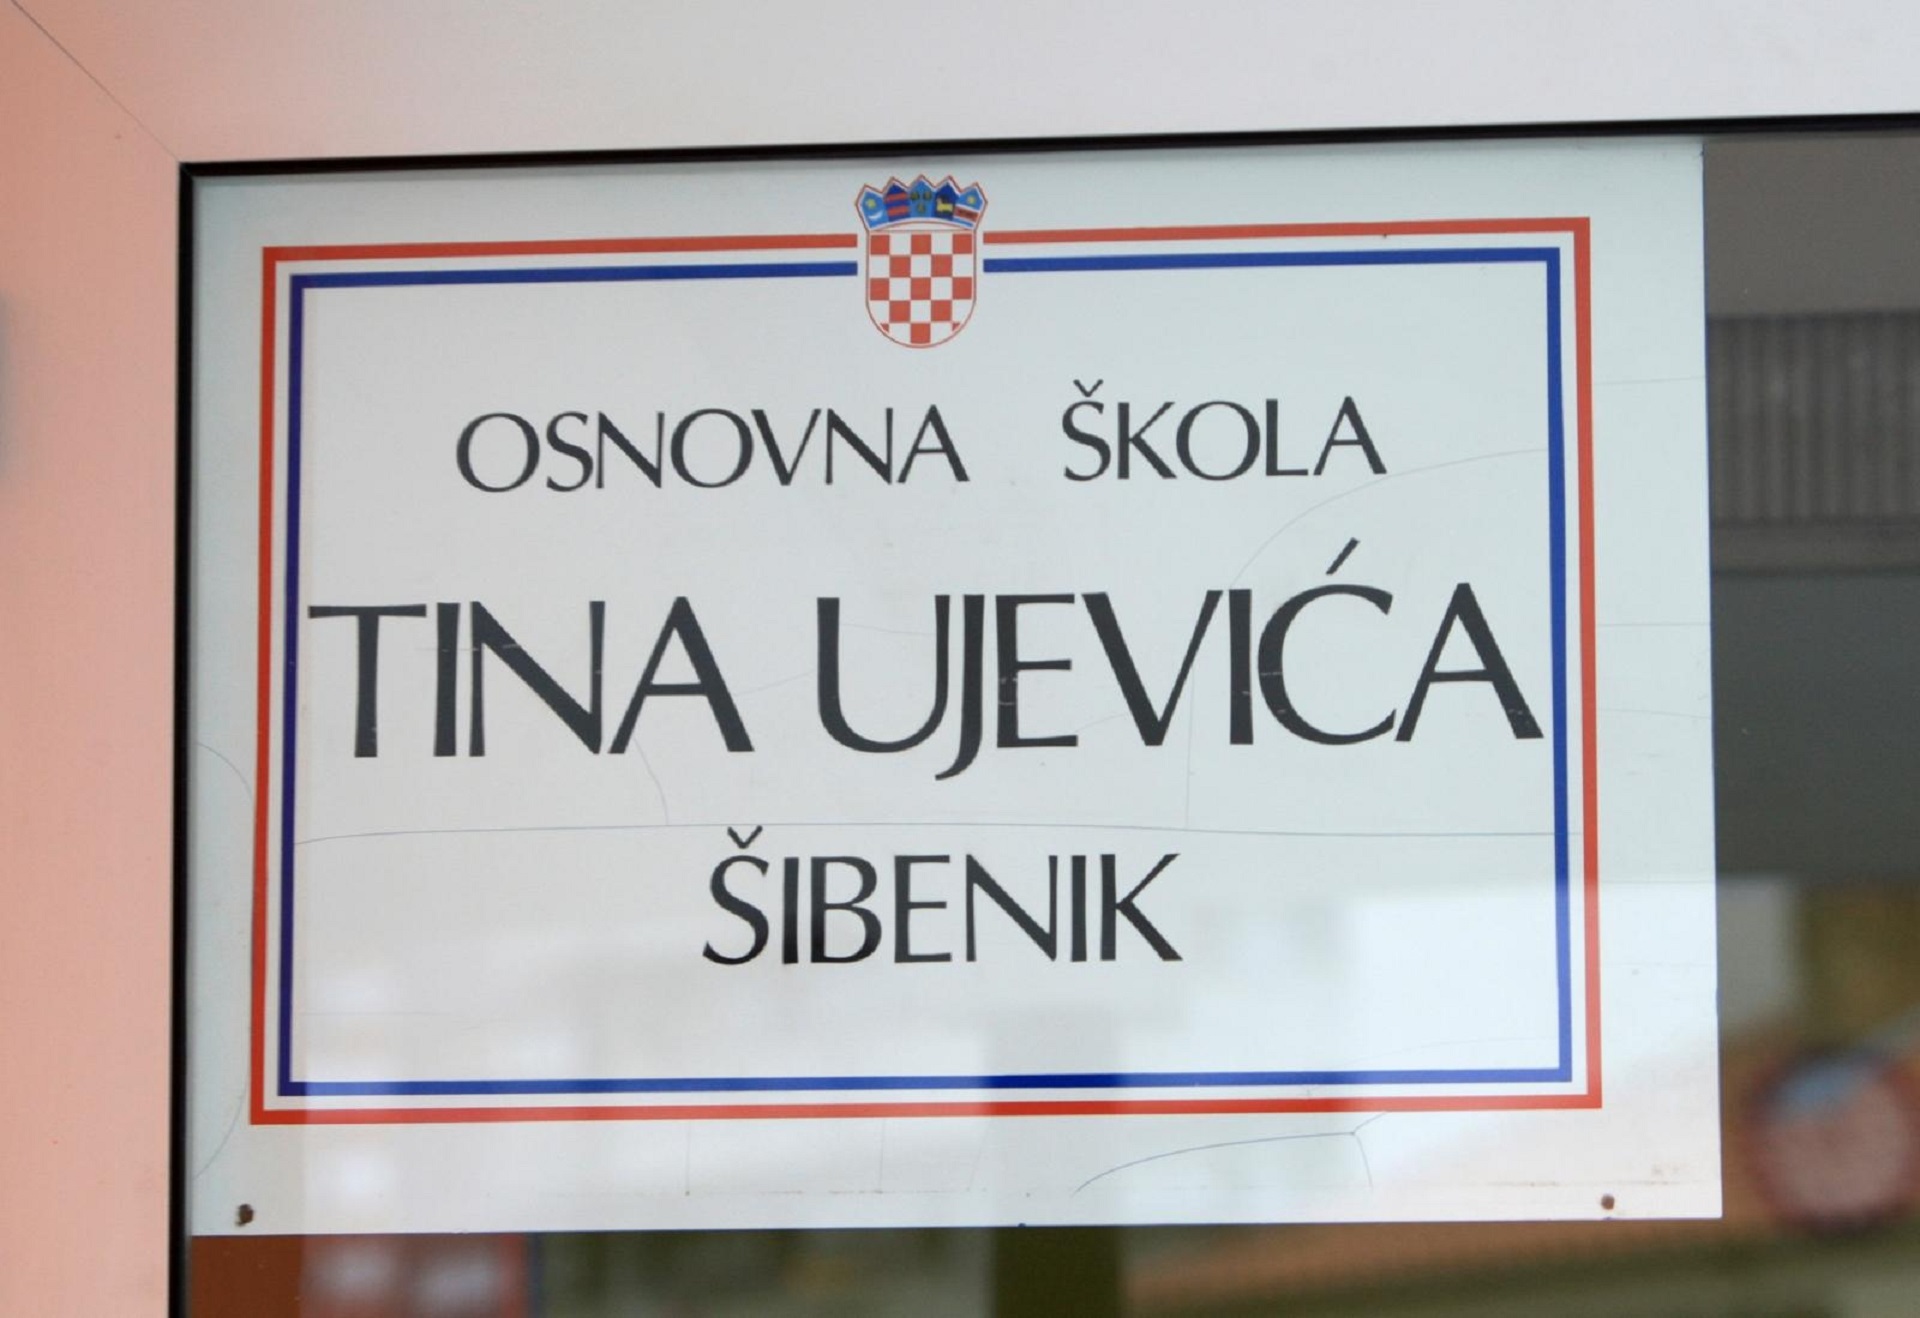 19.12.2014., Sibenik - Osnovne skole u gradu Sibeniku. Osnovna skola Tina Ujevica.
Photo: Dusko Jaramaz/PIXSELL